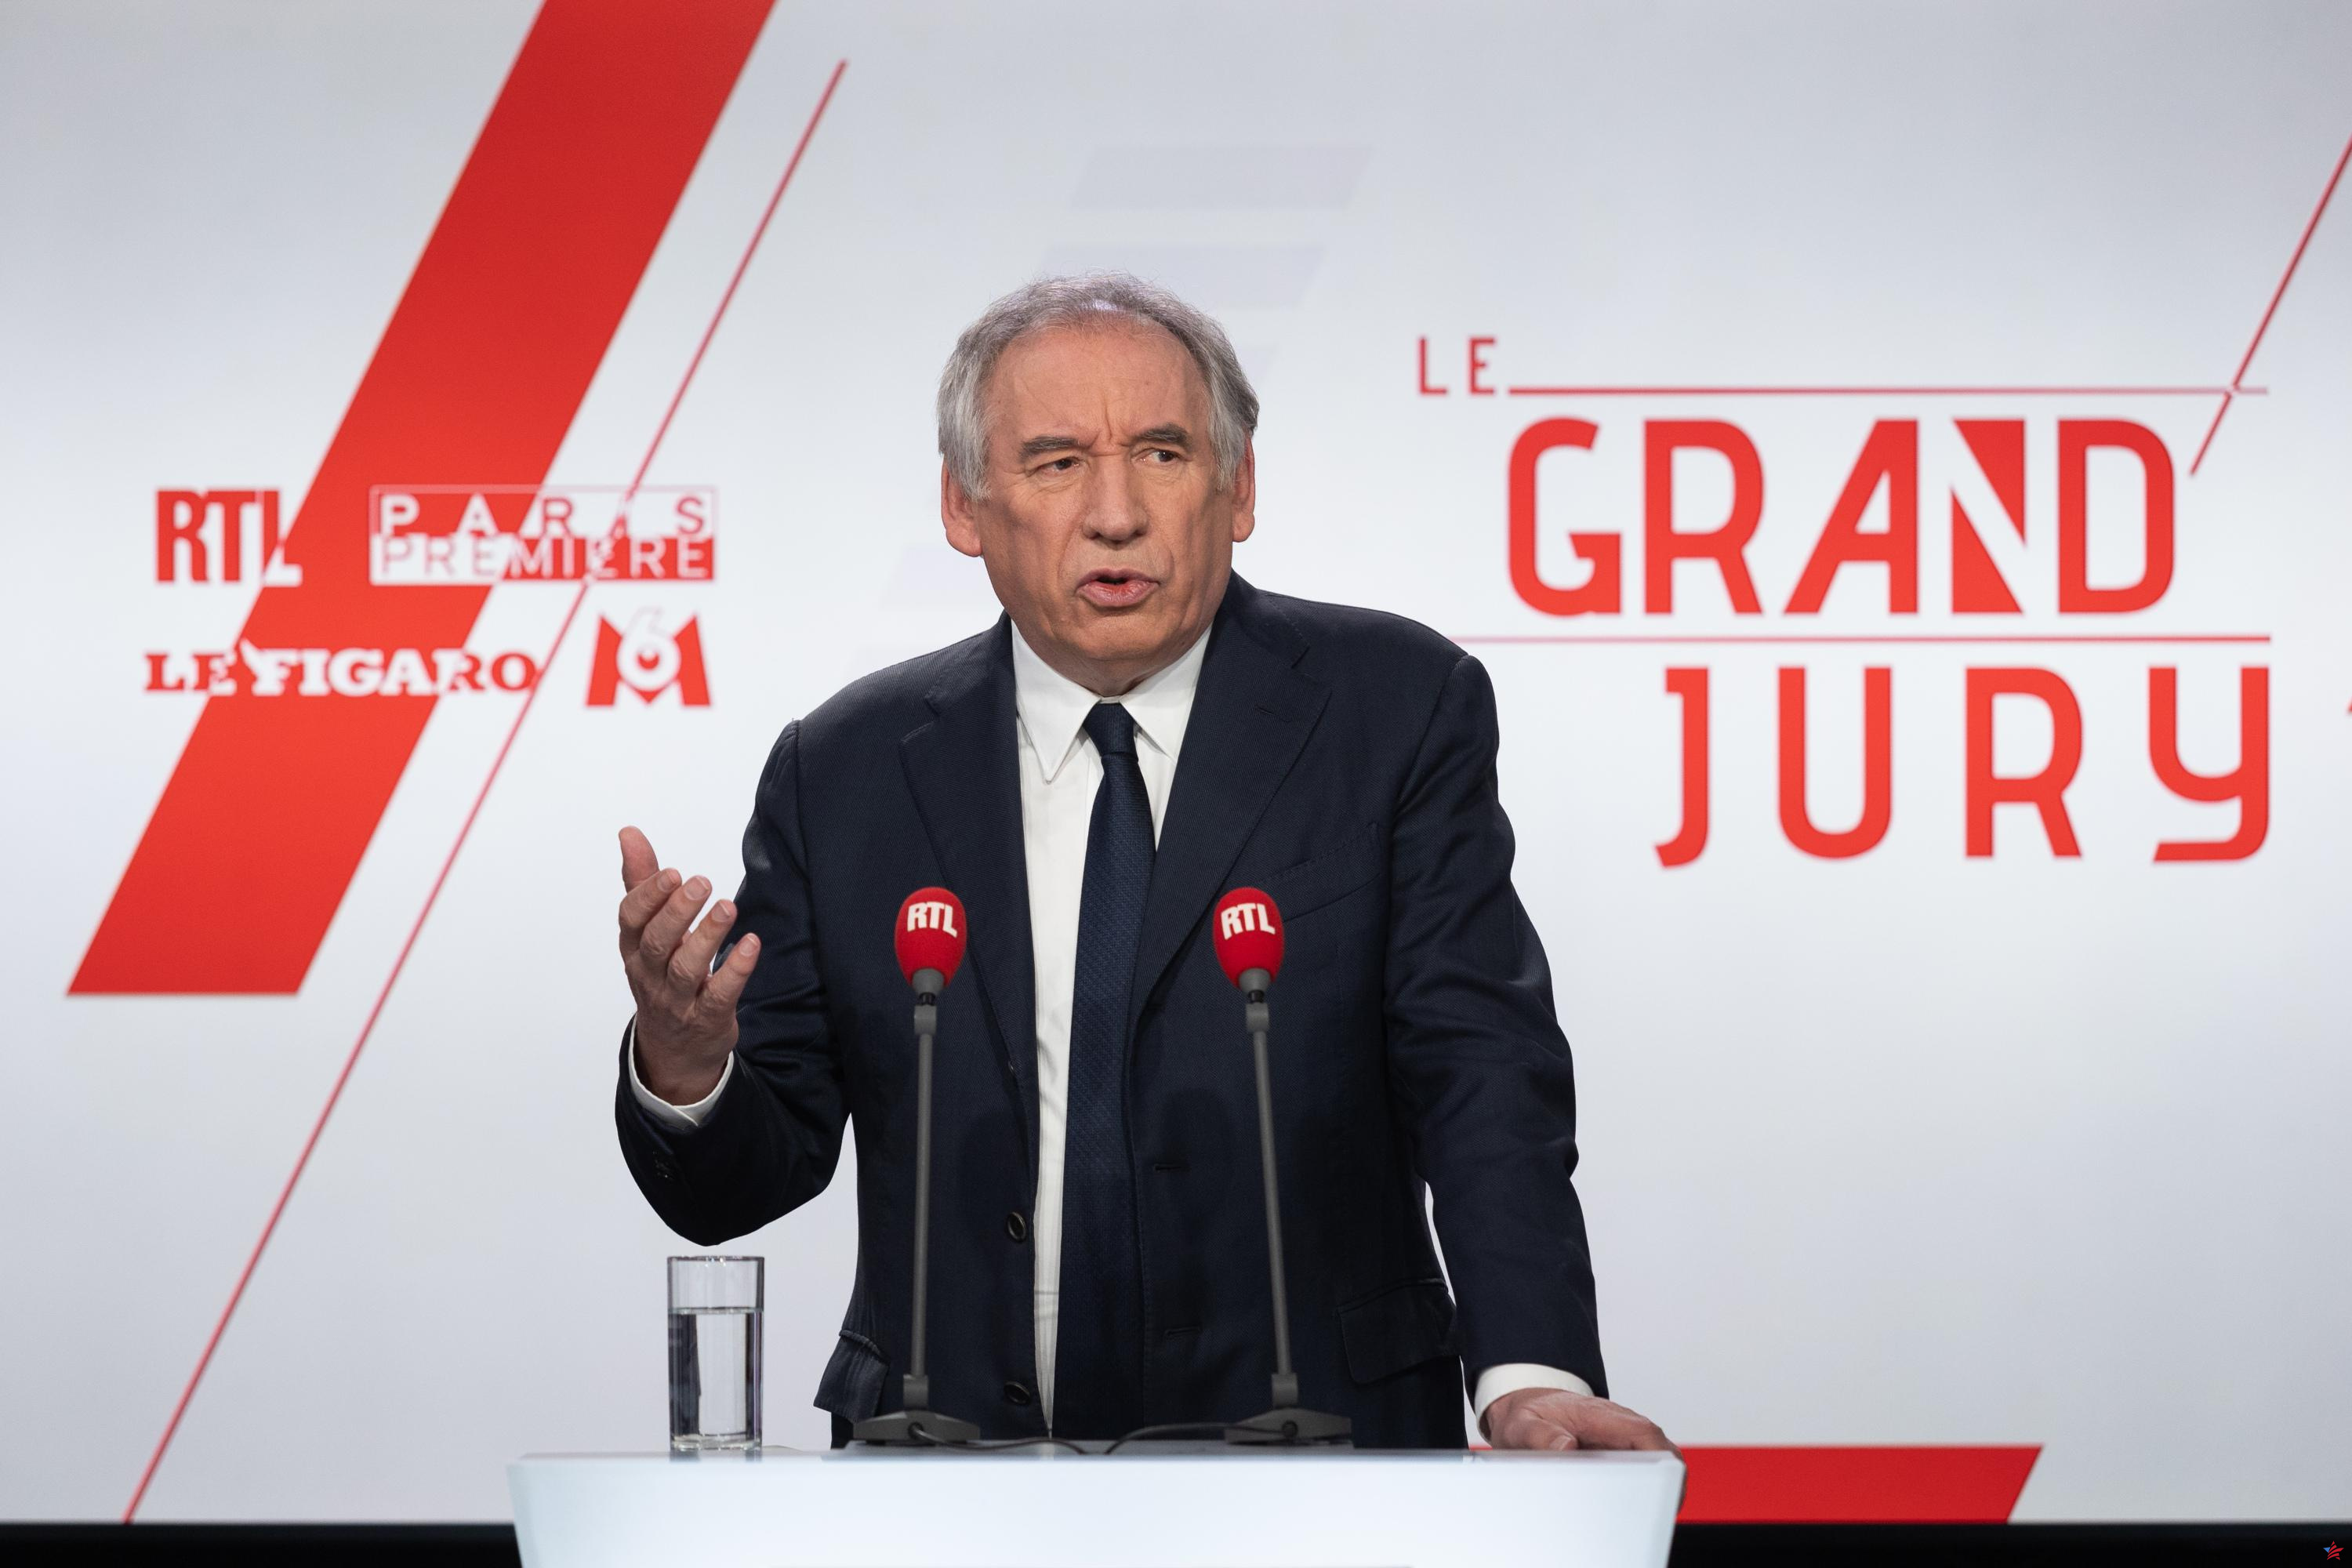 Europeos: “Todos los que afirman que no necesitamos a Europa son unos mentirosos”, critica Bayrou